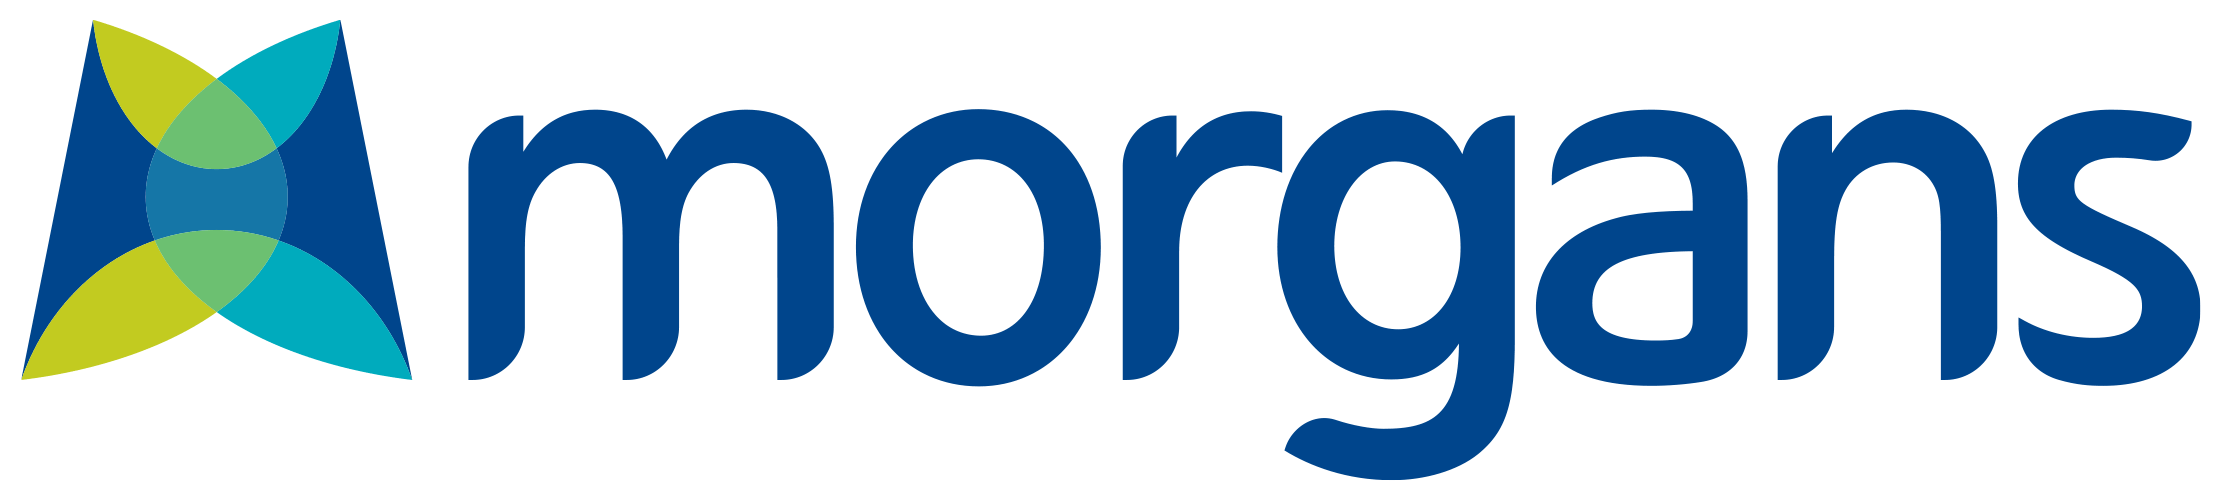 Morgans landscape format logo brandmark